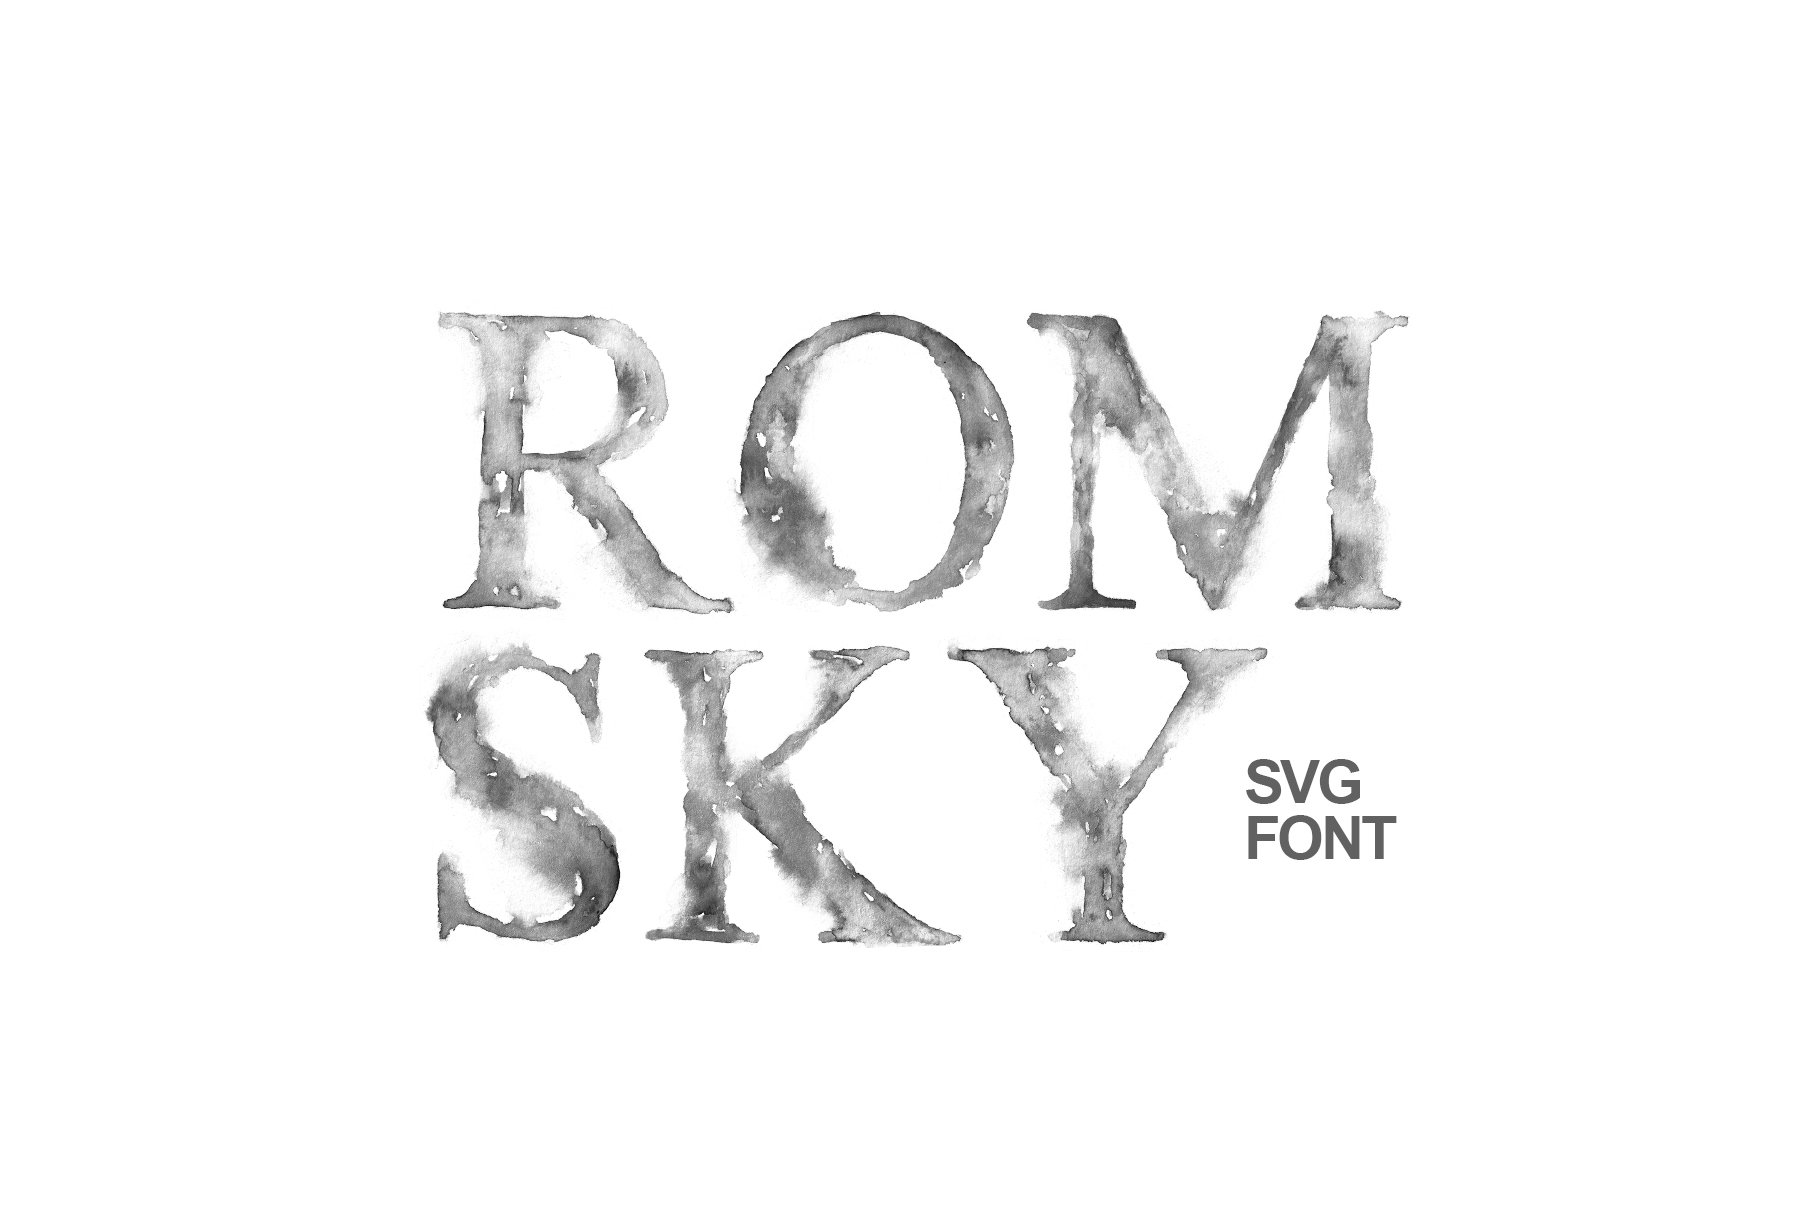 Romsky Watercolor - SVG Font cover image.